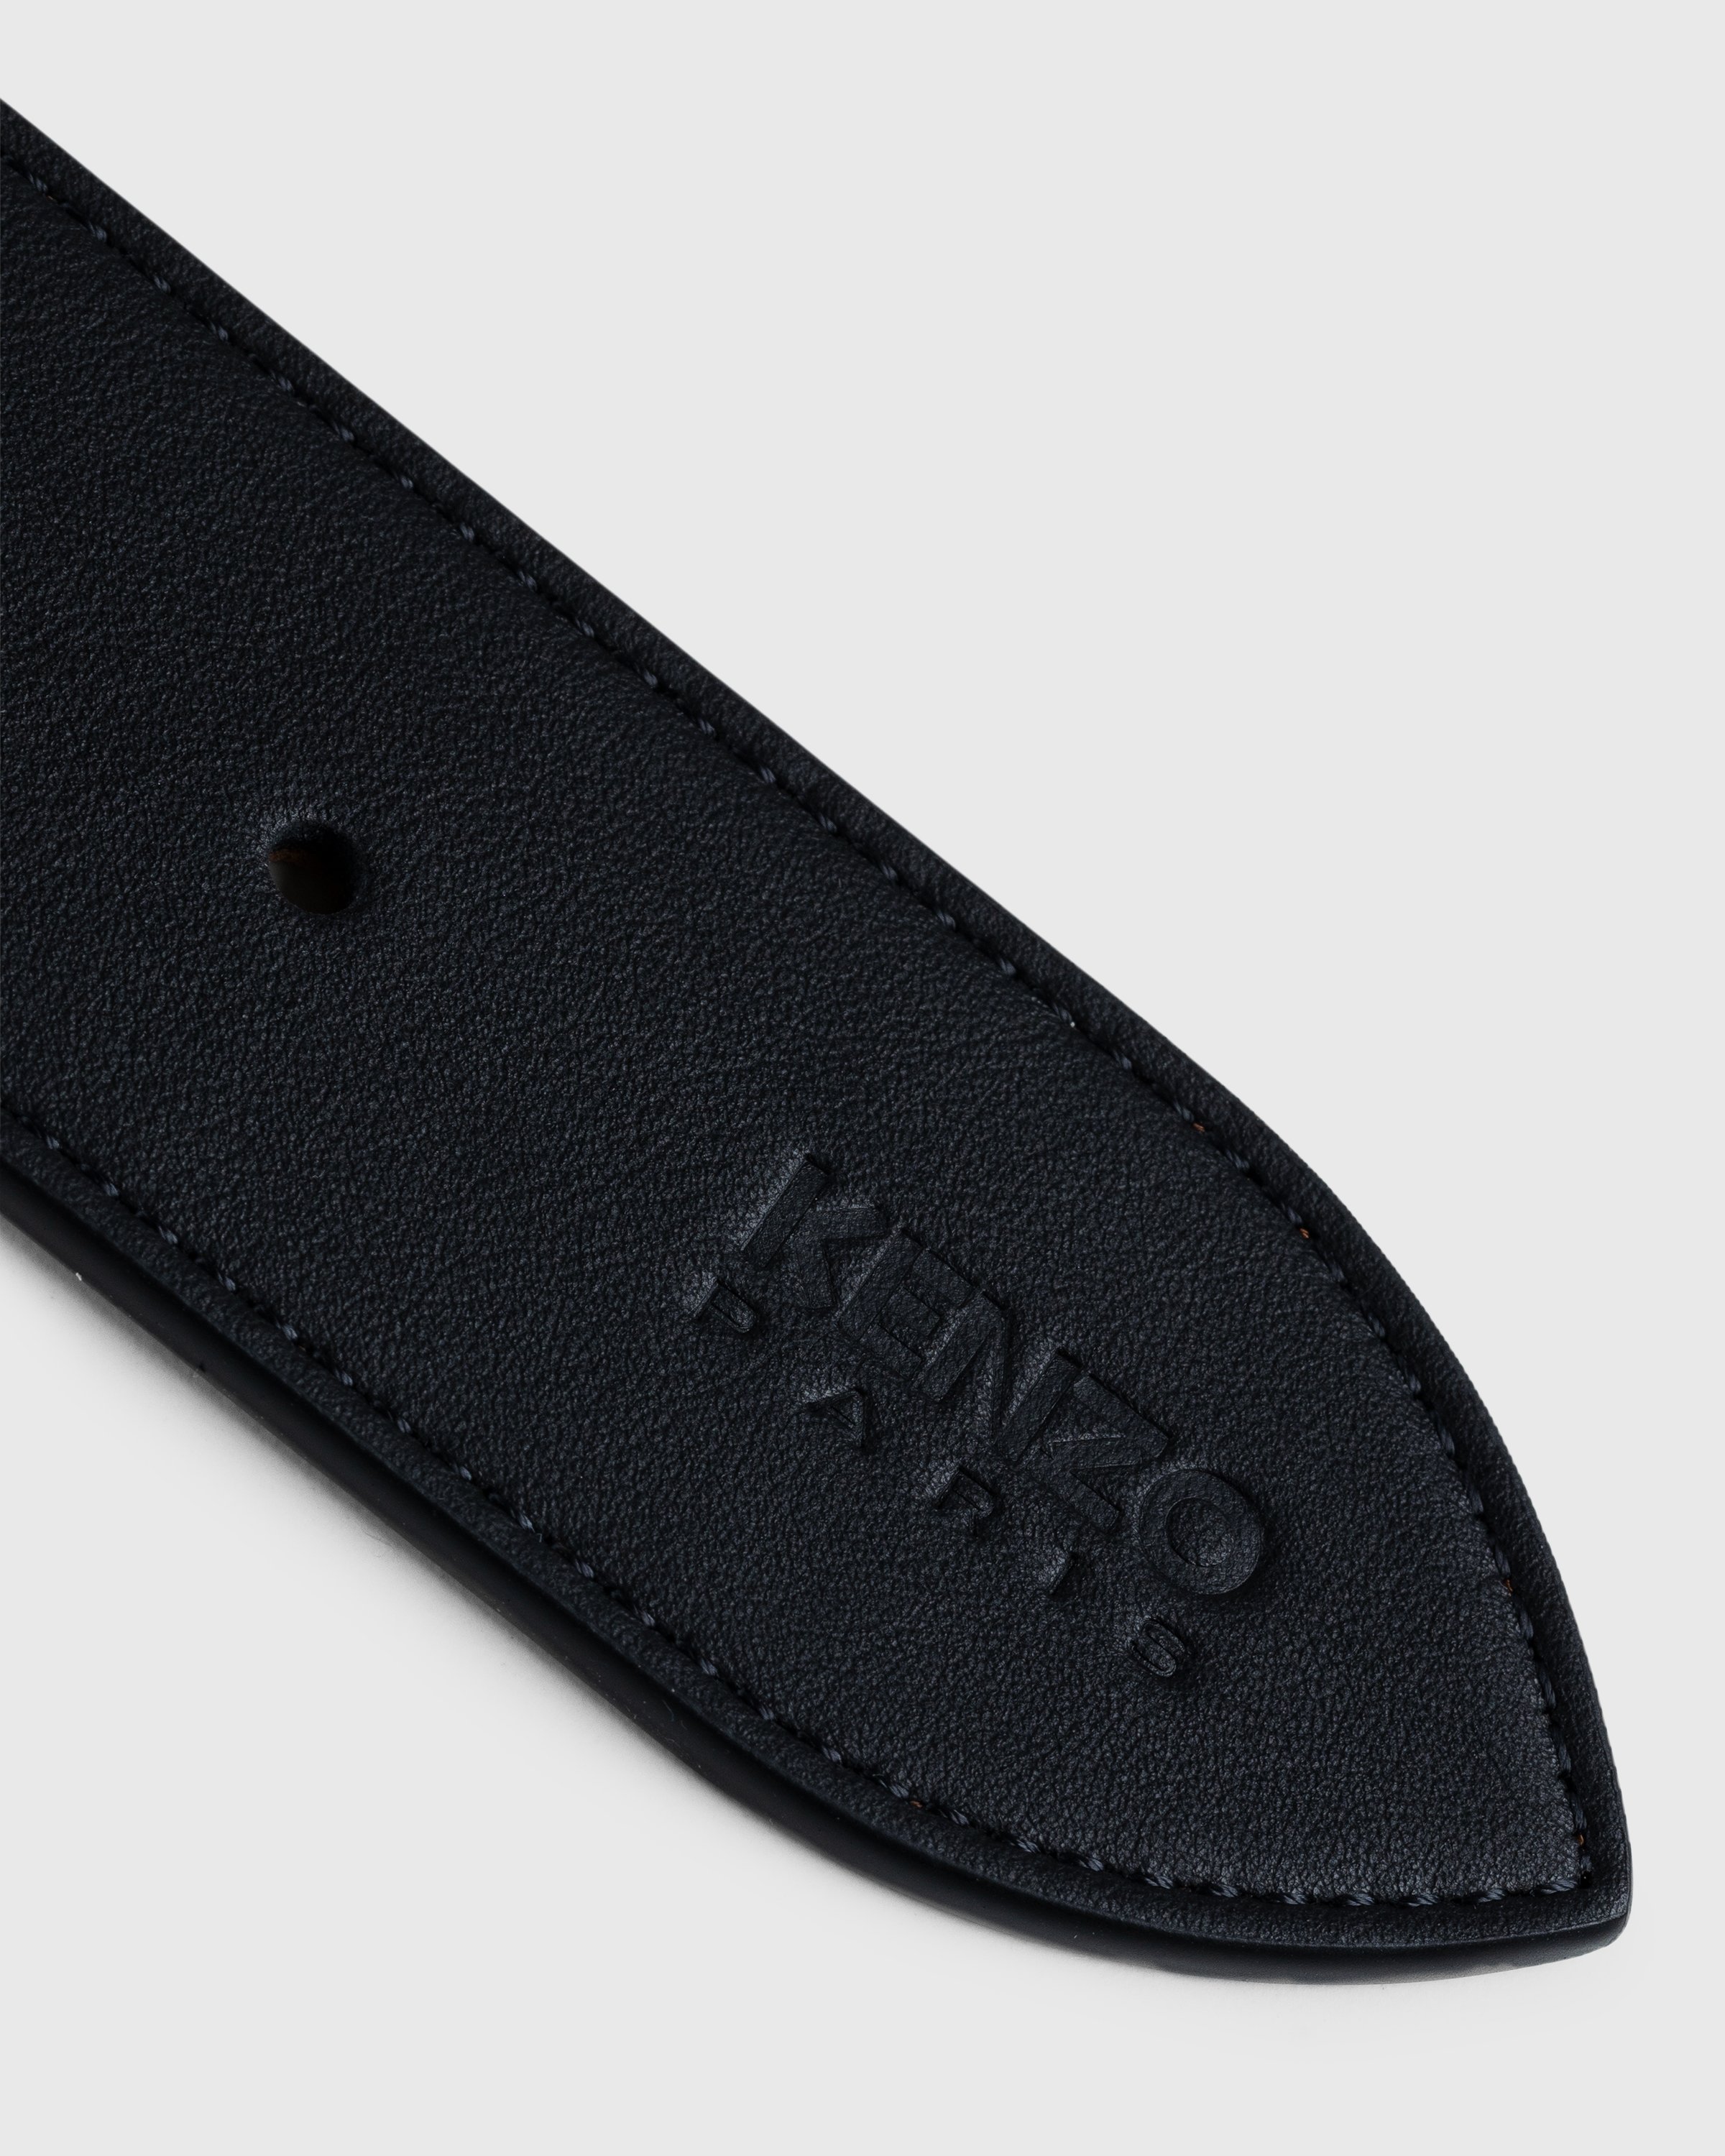 Kenzo - Belt Black - Accessories - Black - Image 2